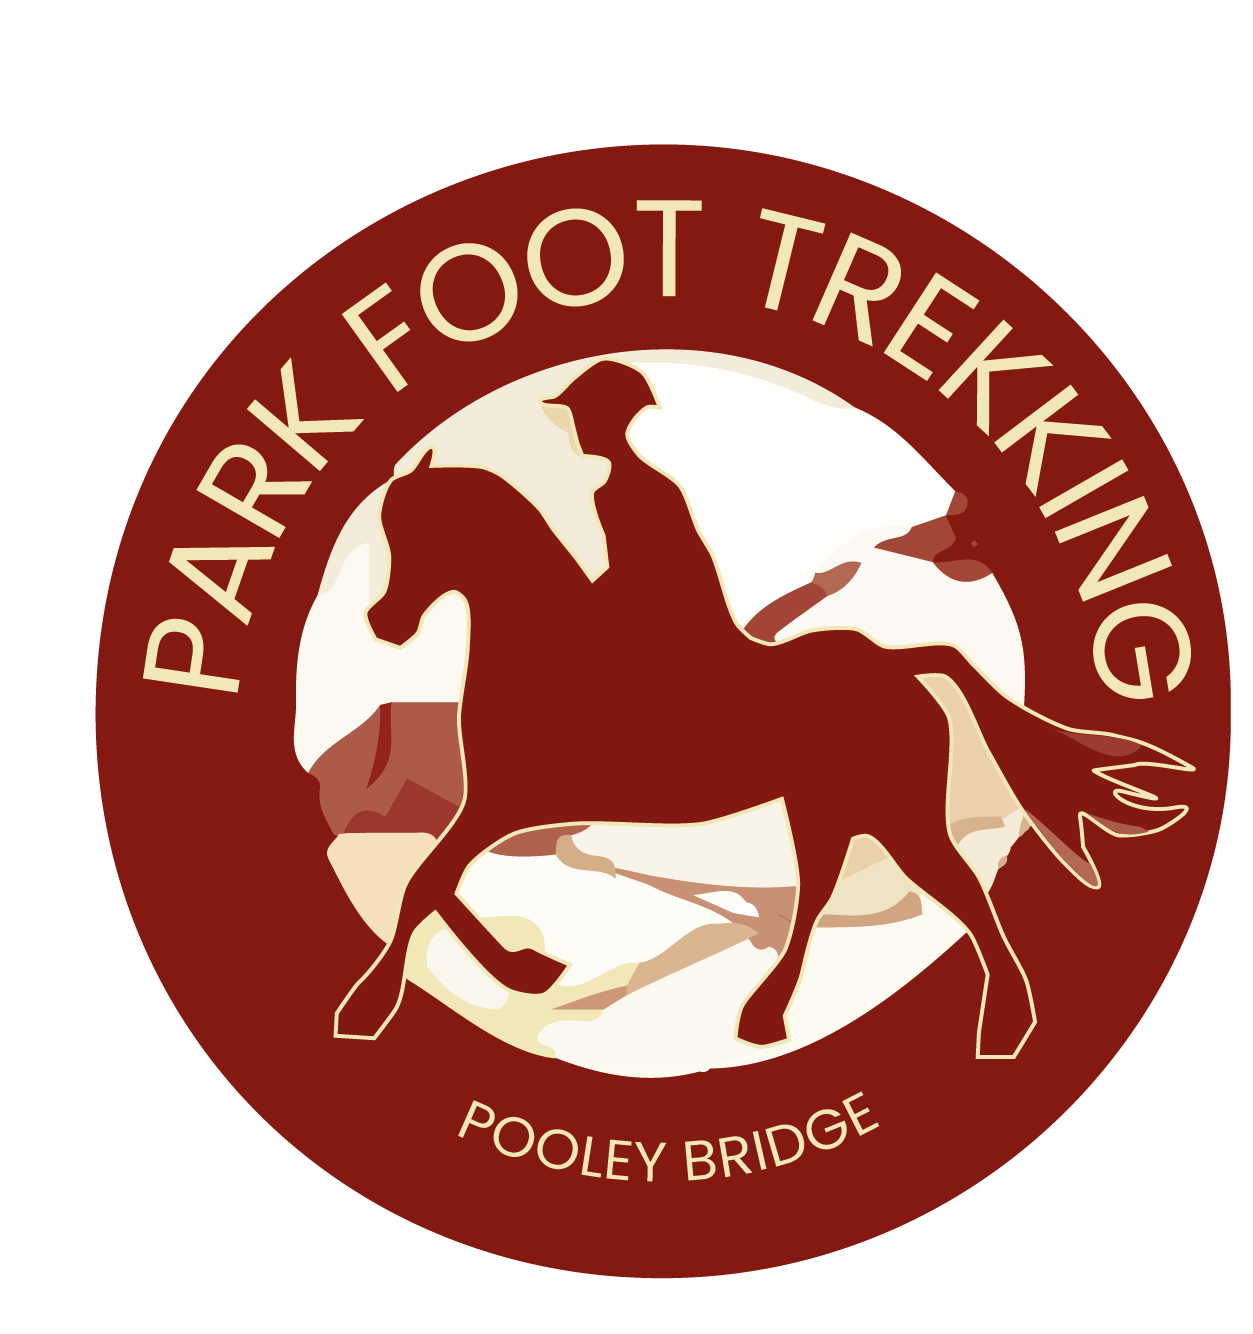 Park Foot Pony Trekking Ullswater